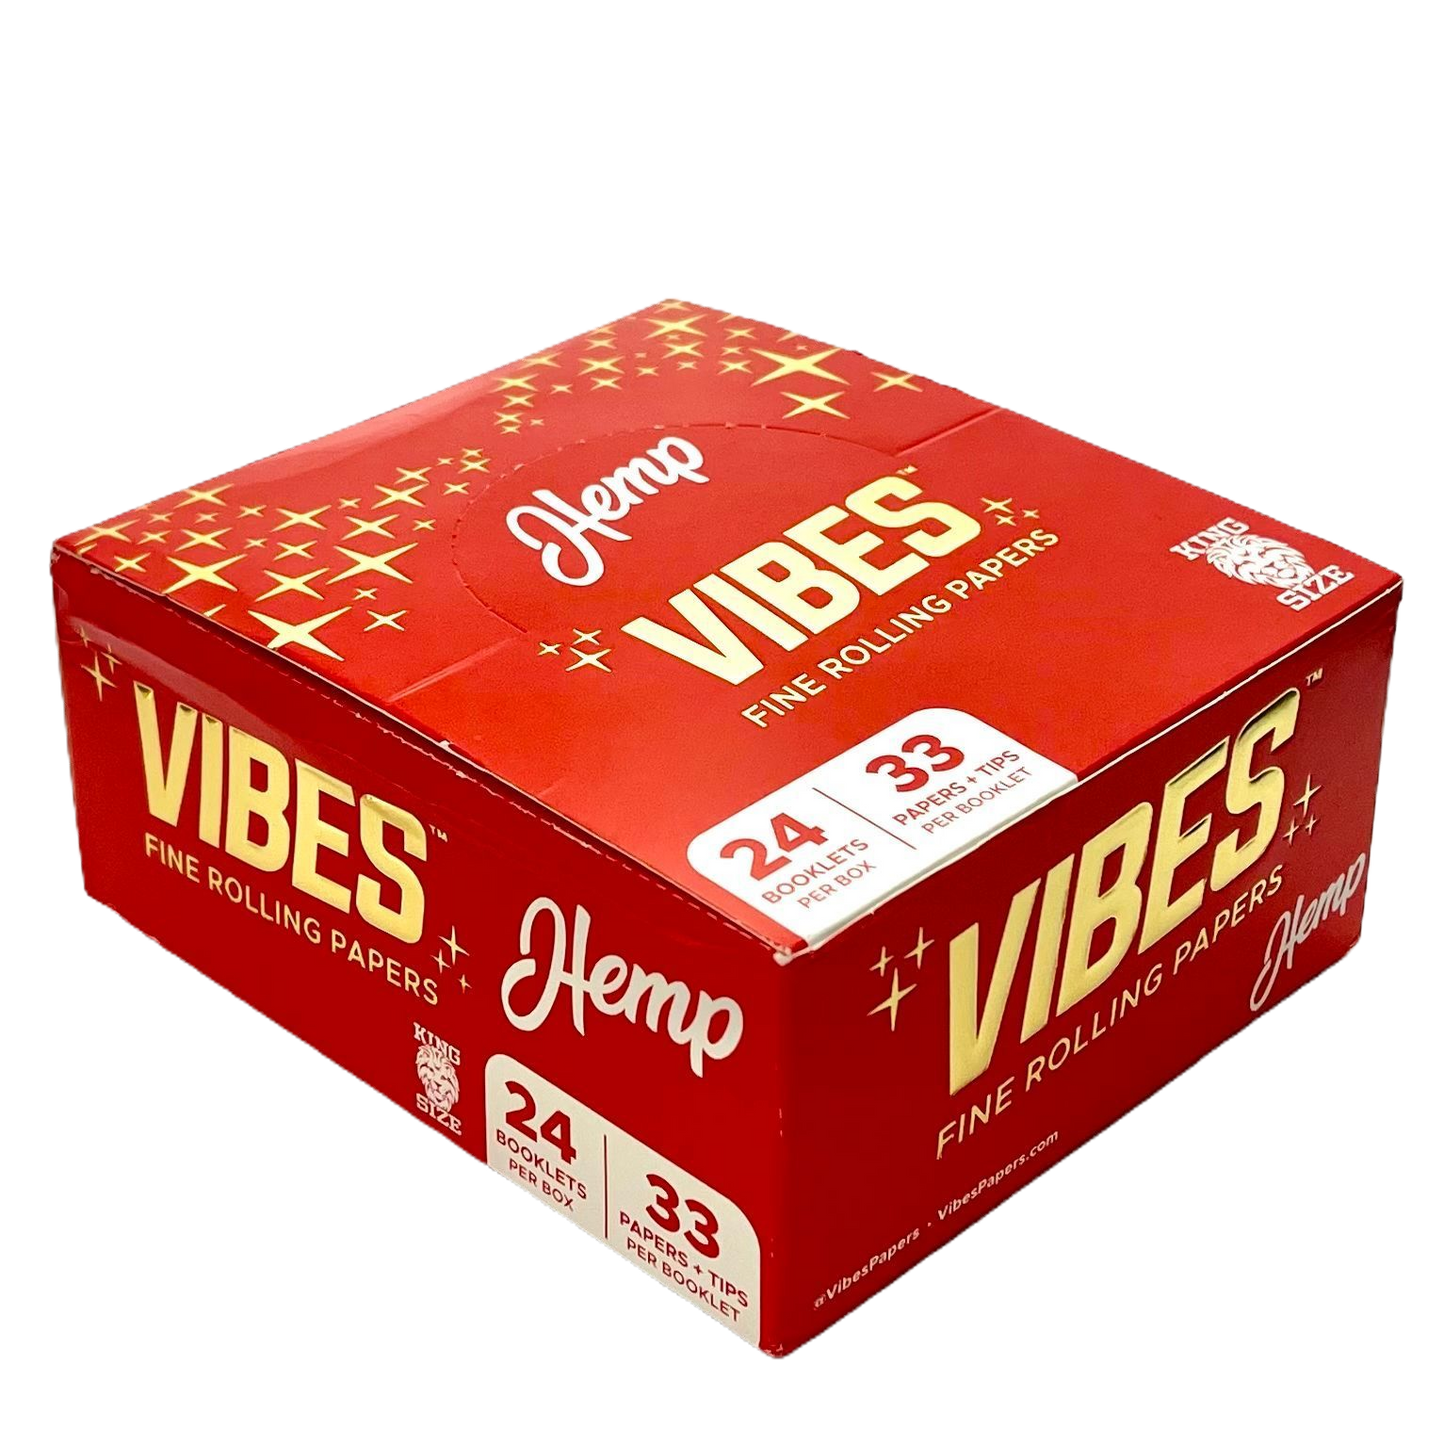 Vibes - Hemp (Red Box)